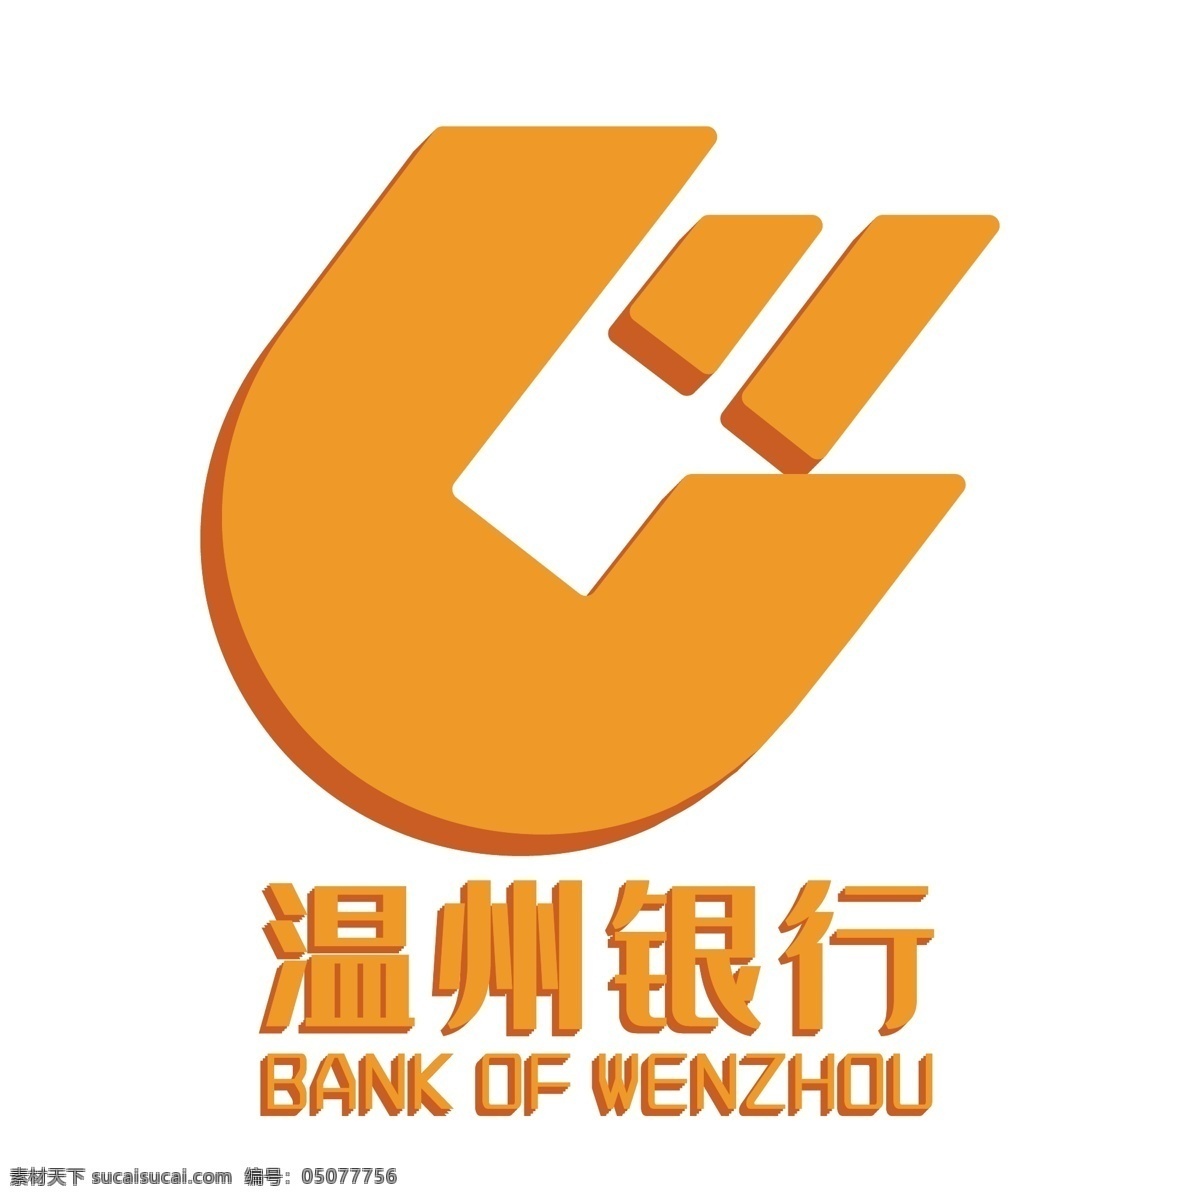 d 黄色 立体 温州 银行 logo 图标 温州银行 企业图标 金融 2.5d logo图标 免抠图png 千库原创